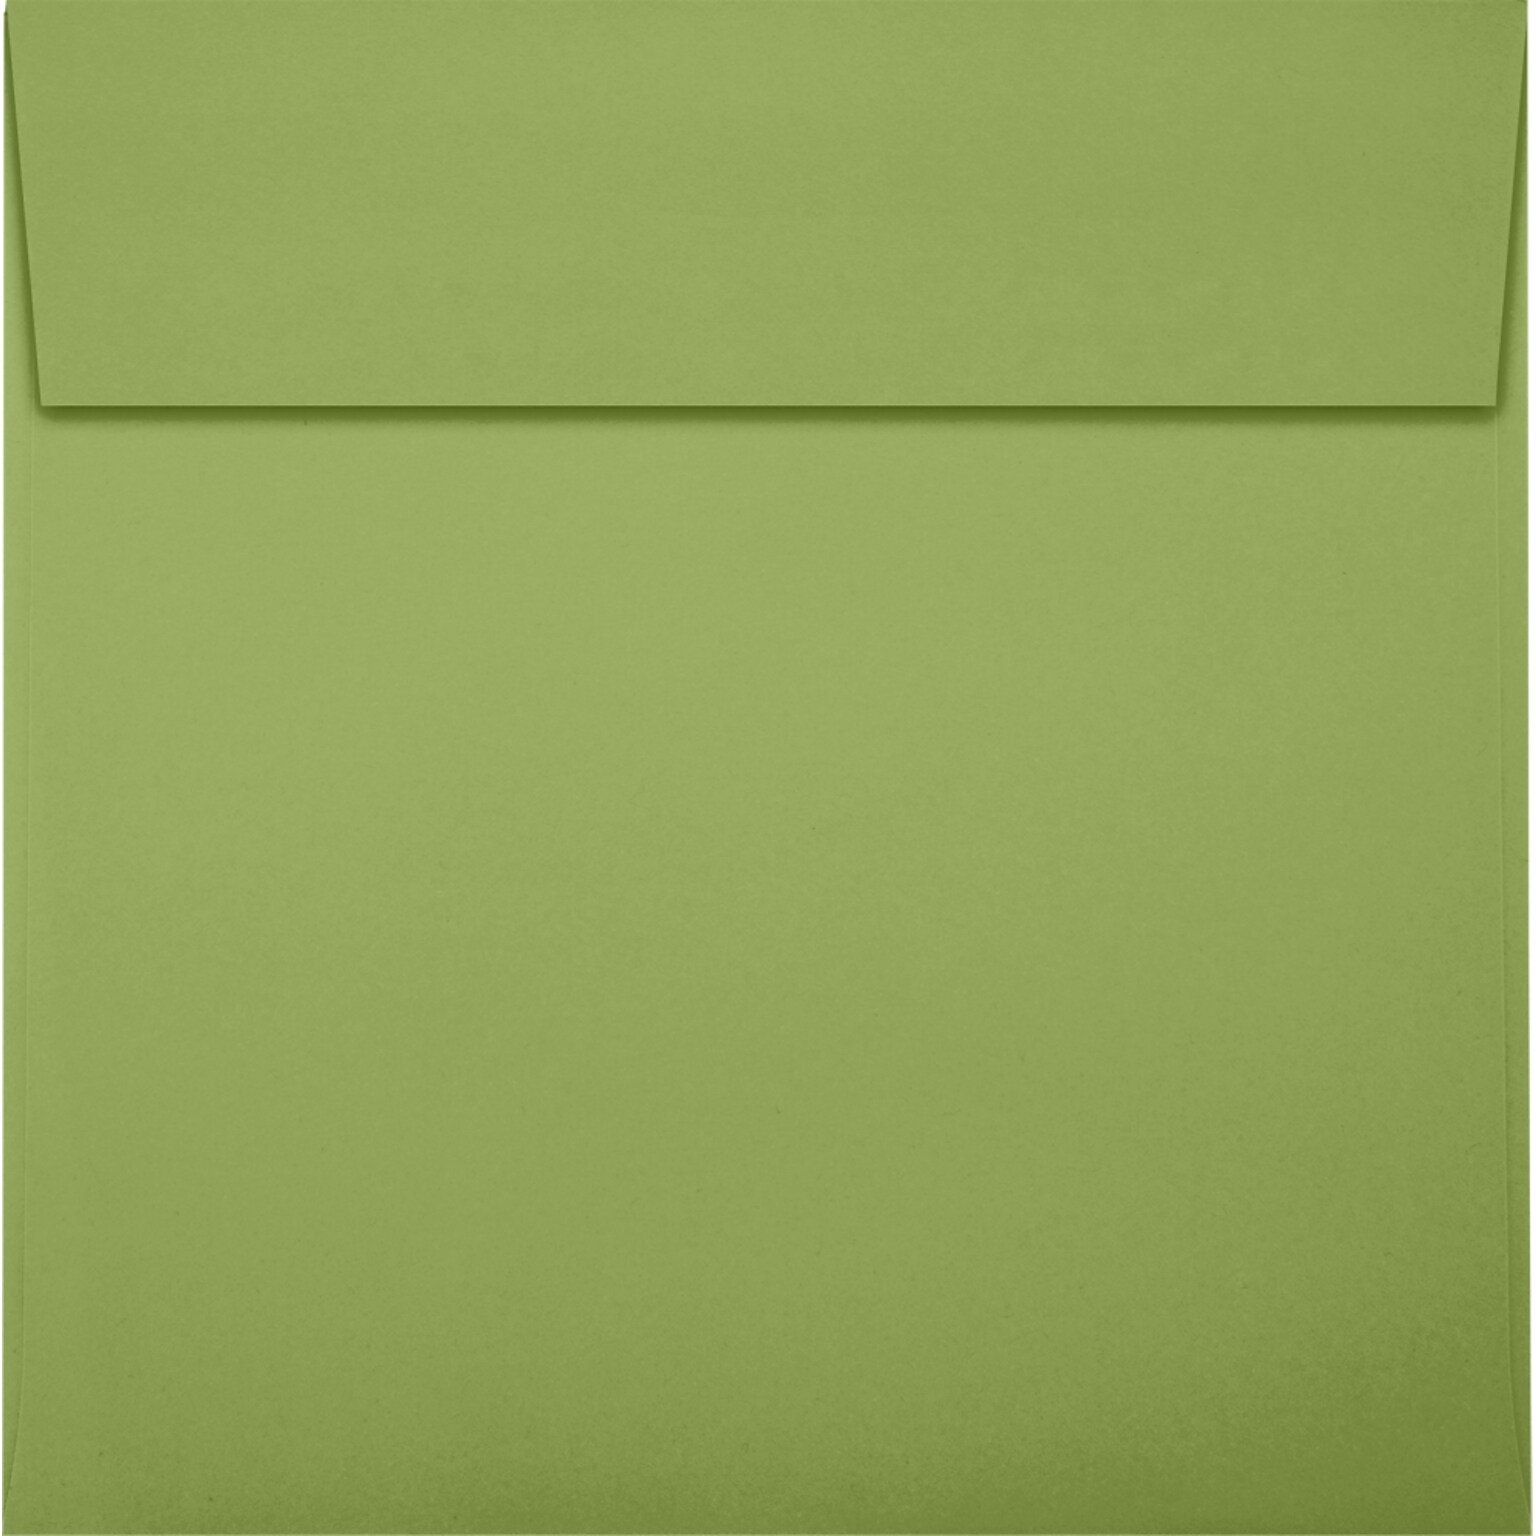 JAM Paper Square Envelopes, Peel & Press, 70lb Avocado Green, 6 1/4 x 6 1/4, 500 Pack (8530-102-500)